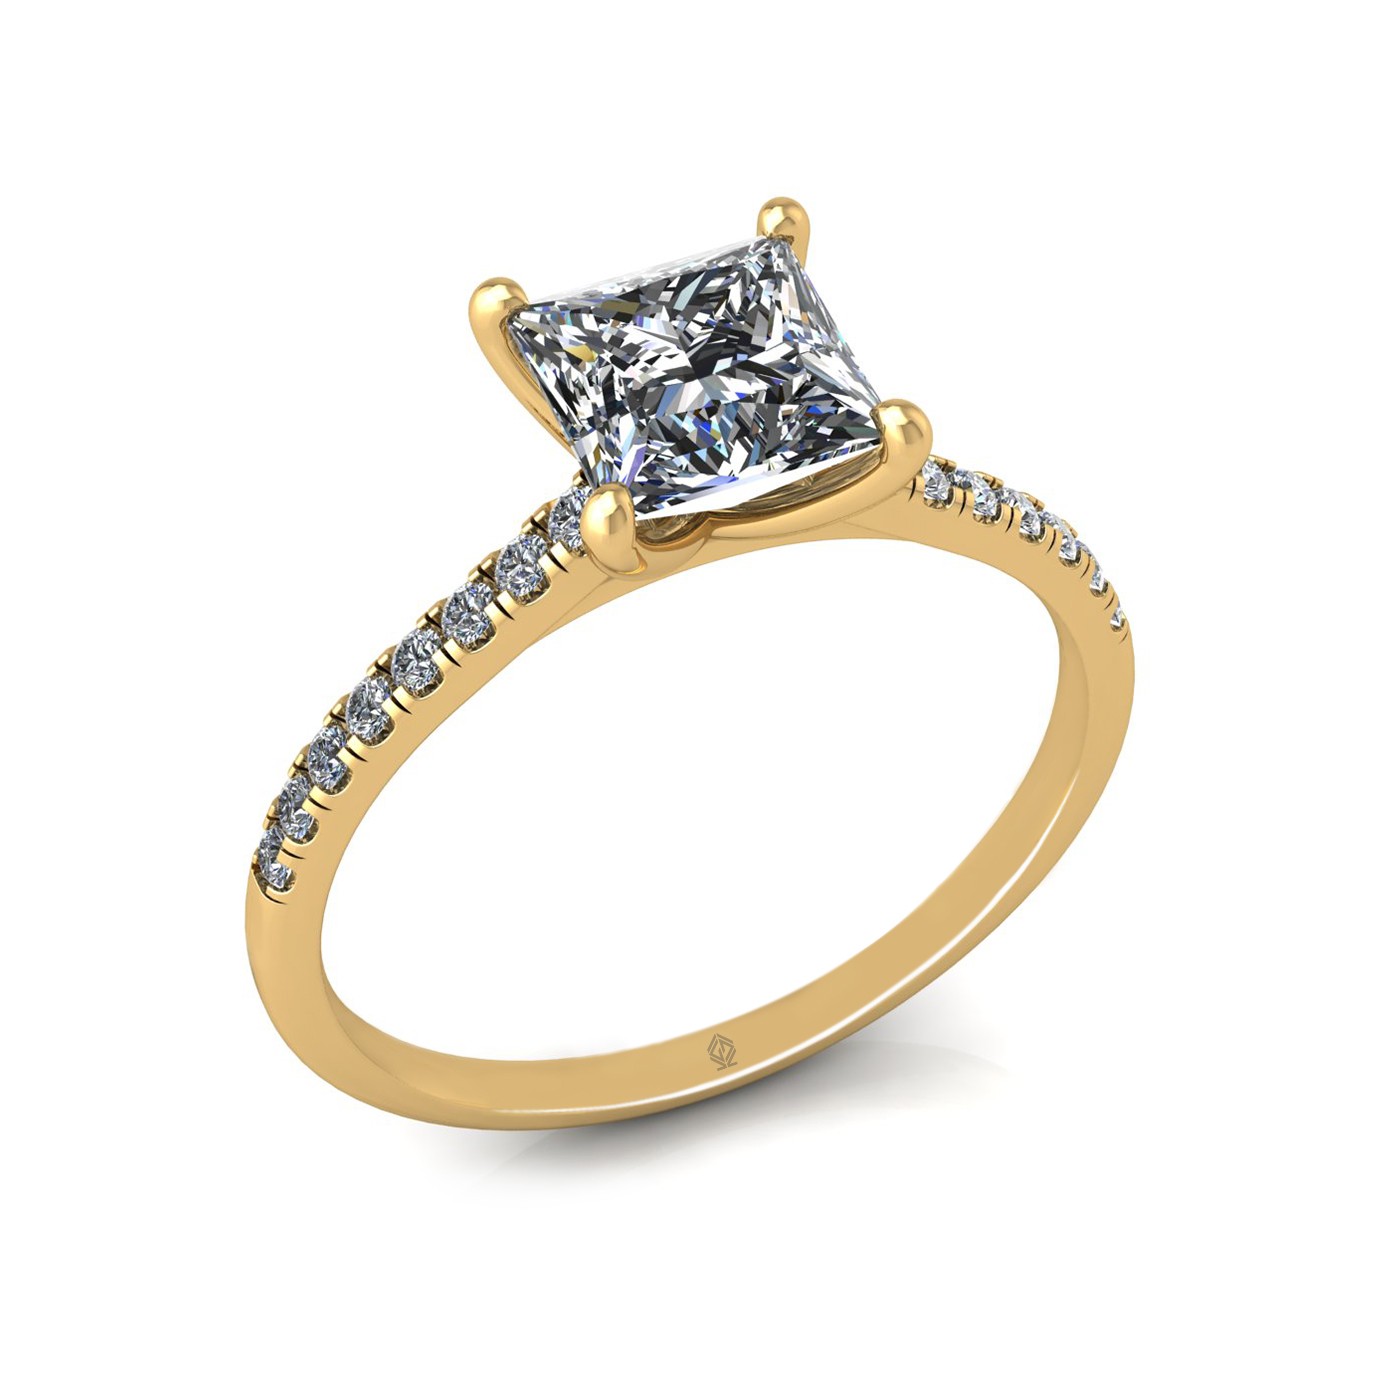 18k yellow gold  1,20 ct 4 prongs princess cut diamond engagement ring with whisper thin pavÉ set band